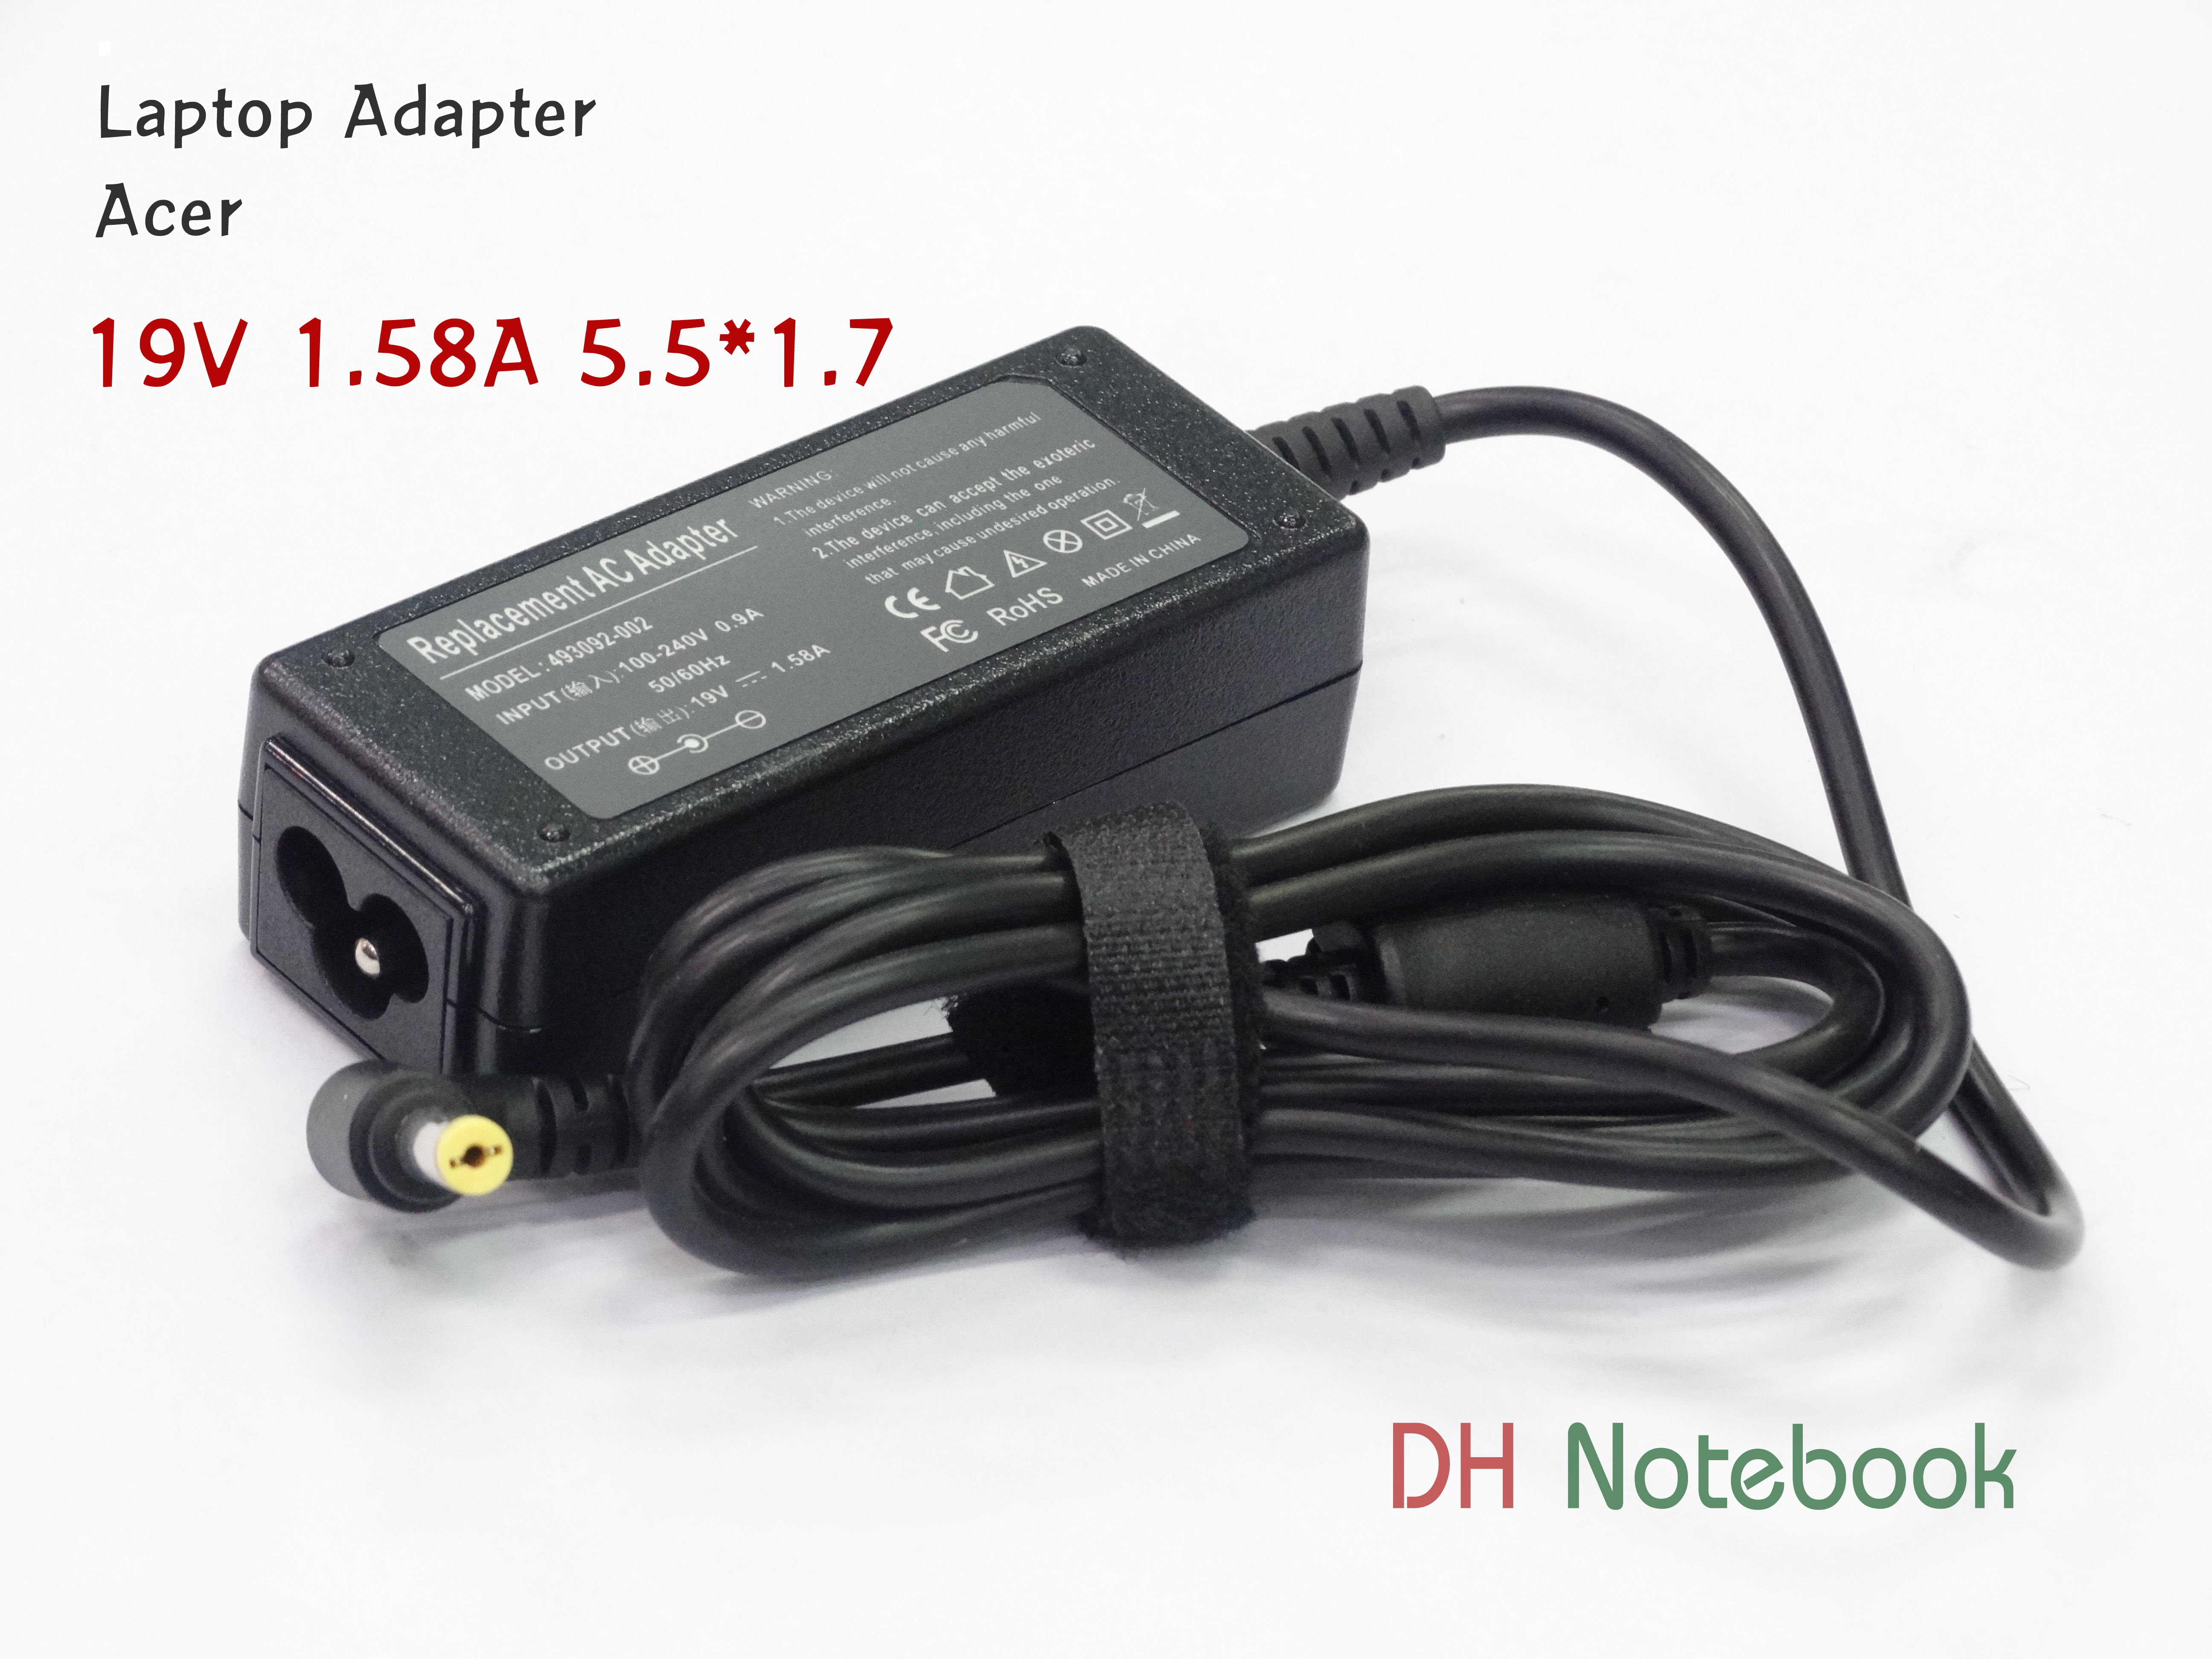 Adapter ACER 19V 1.58A (5.5*1.7)